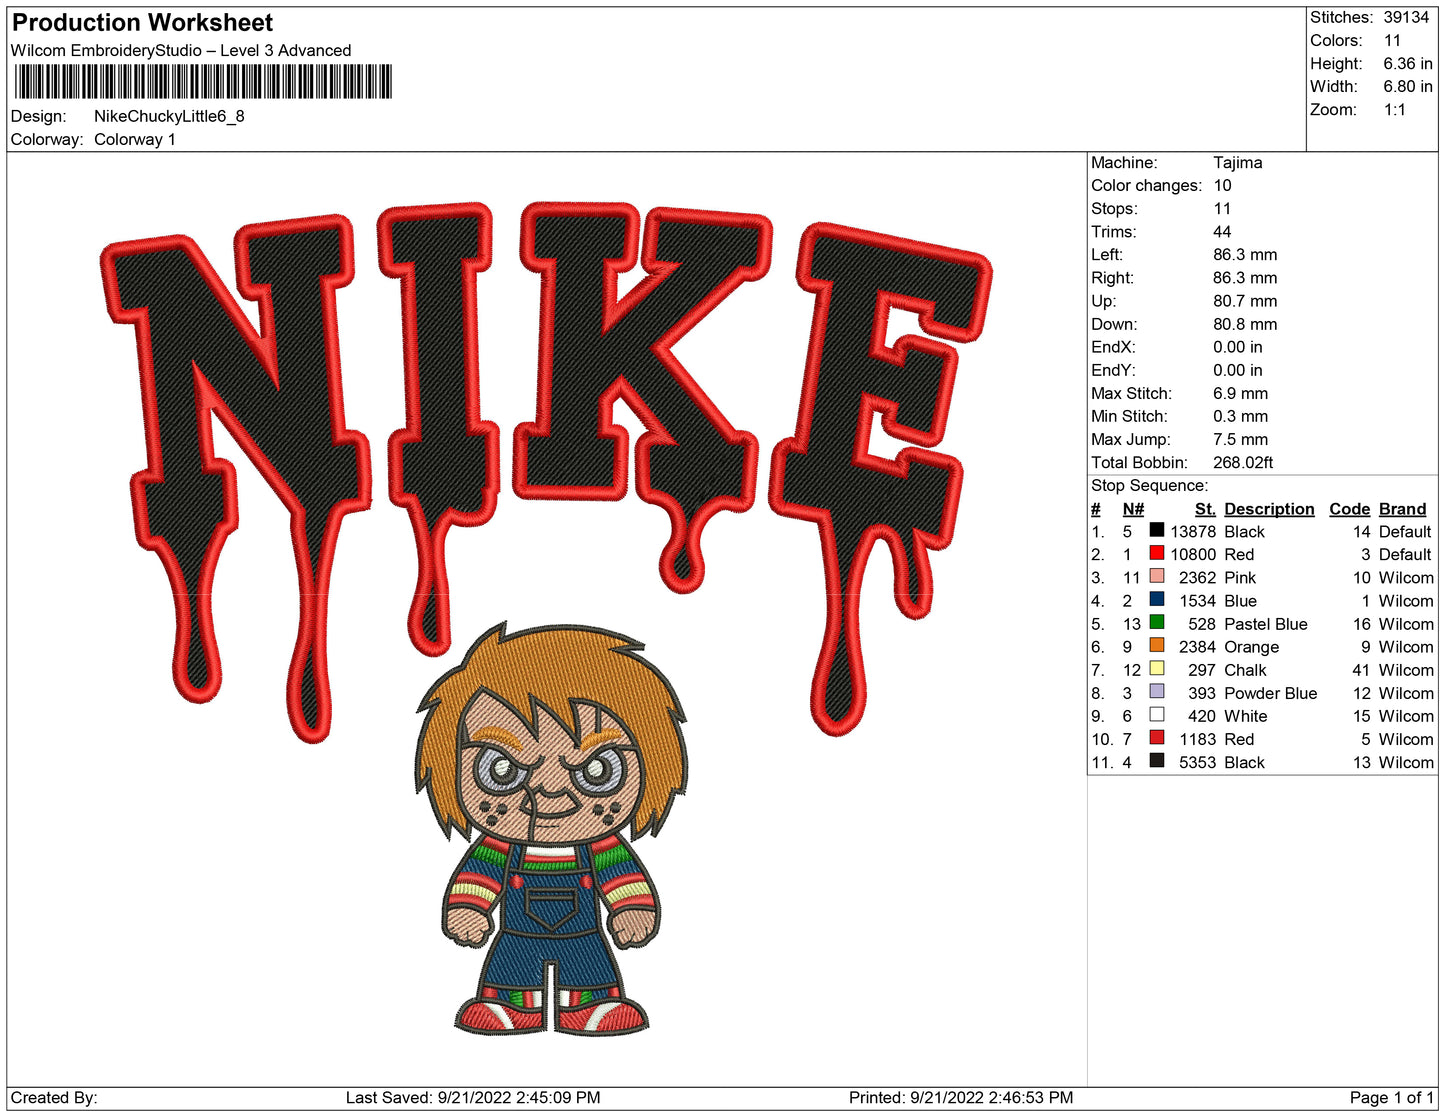 Nike Chucky Little